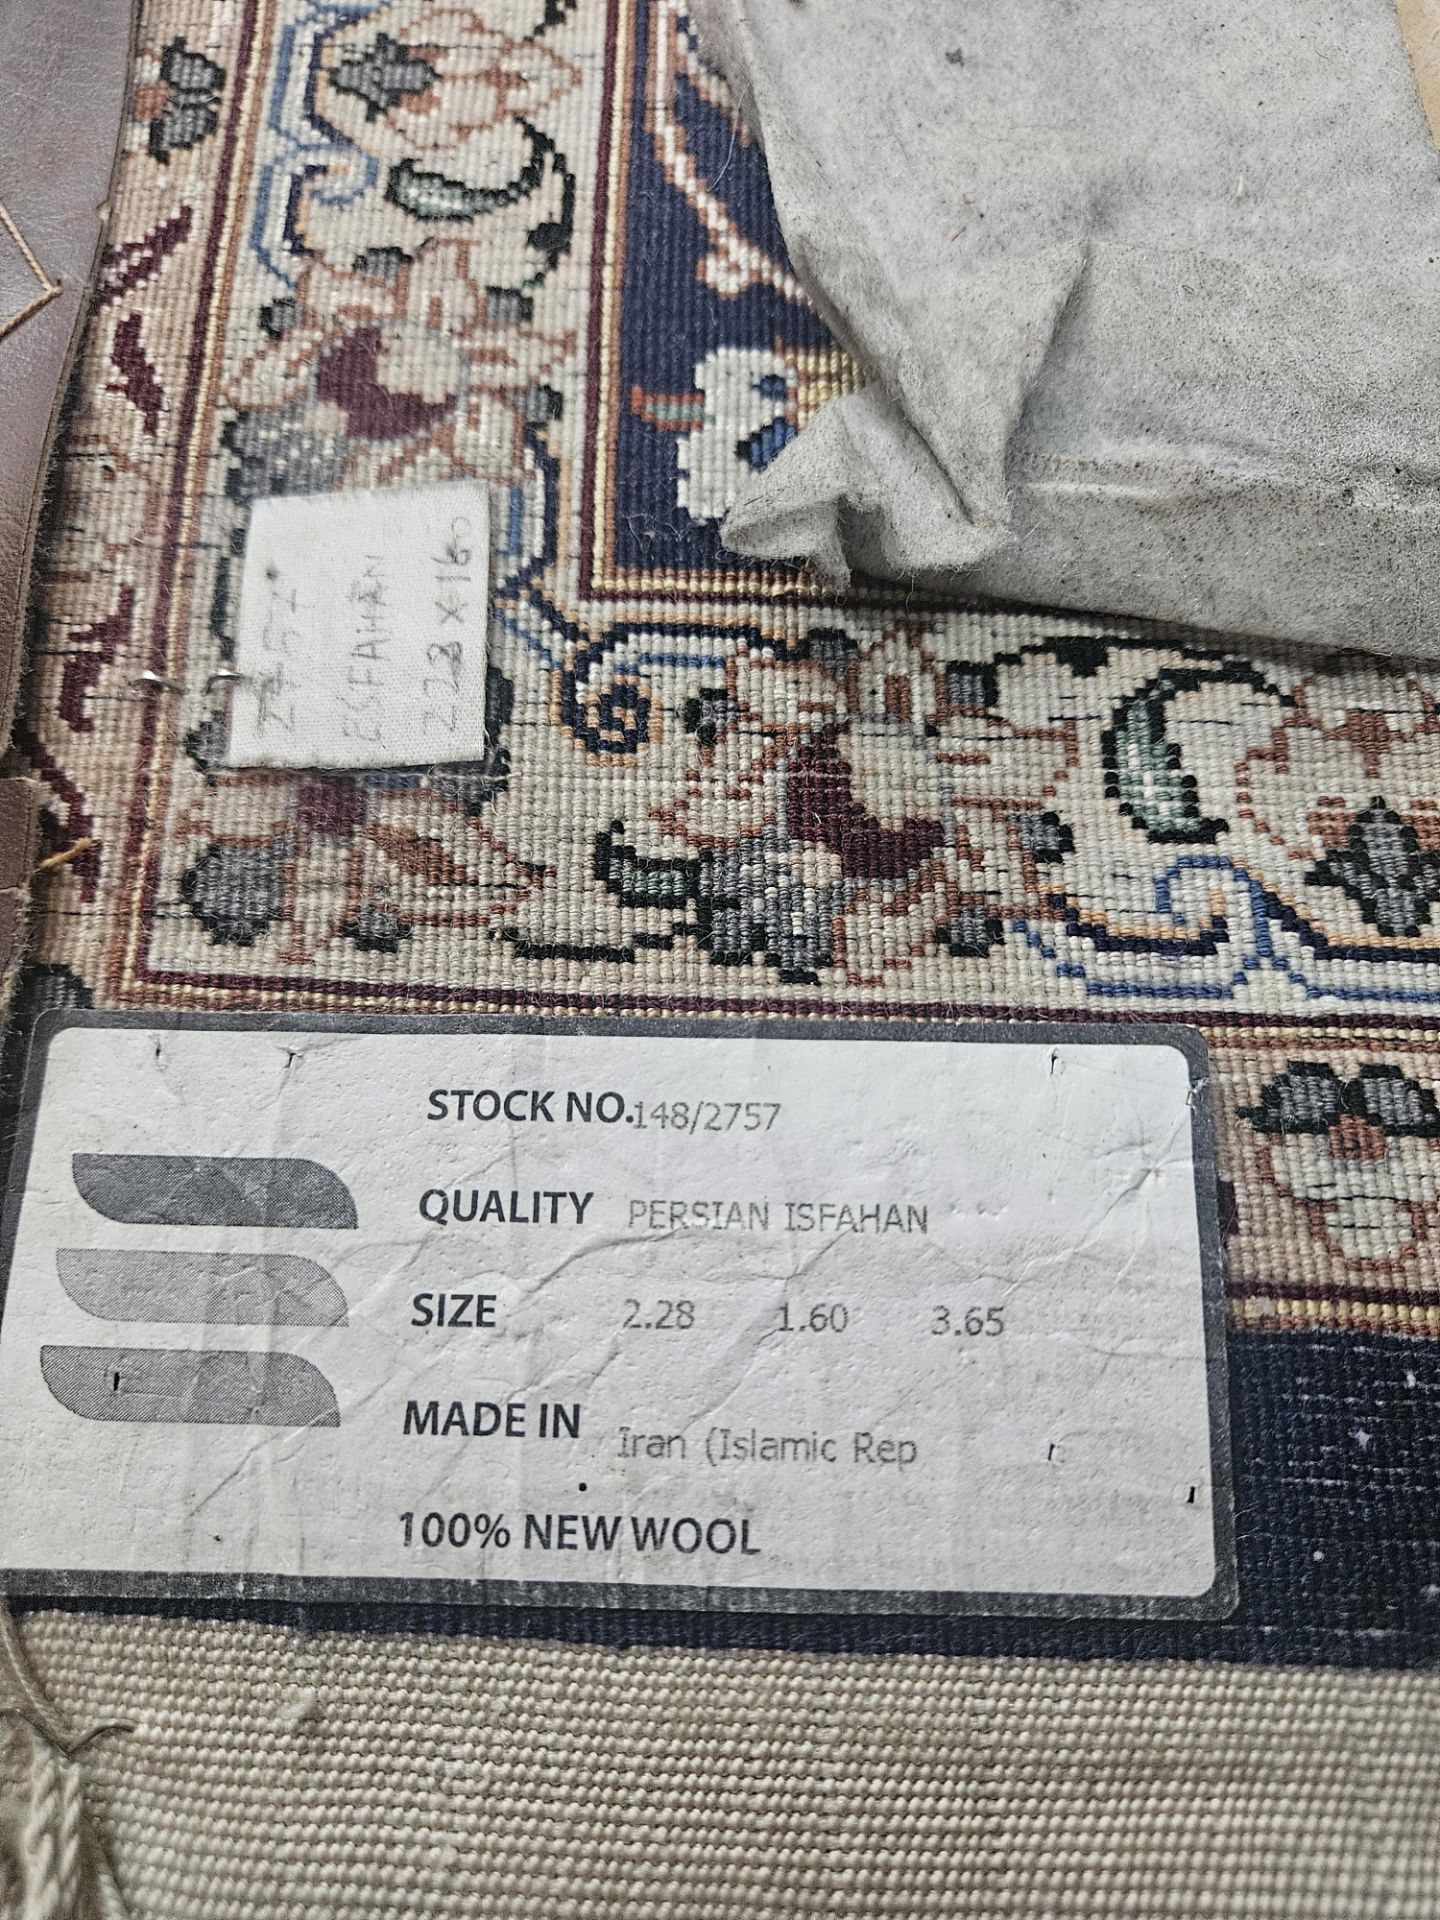 * Persian Isfahan - 100% new wool, made in Iran (Islamic Rep) - 2.28m x 1.6m - Image 4 of 5